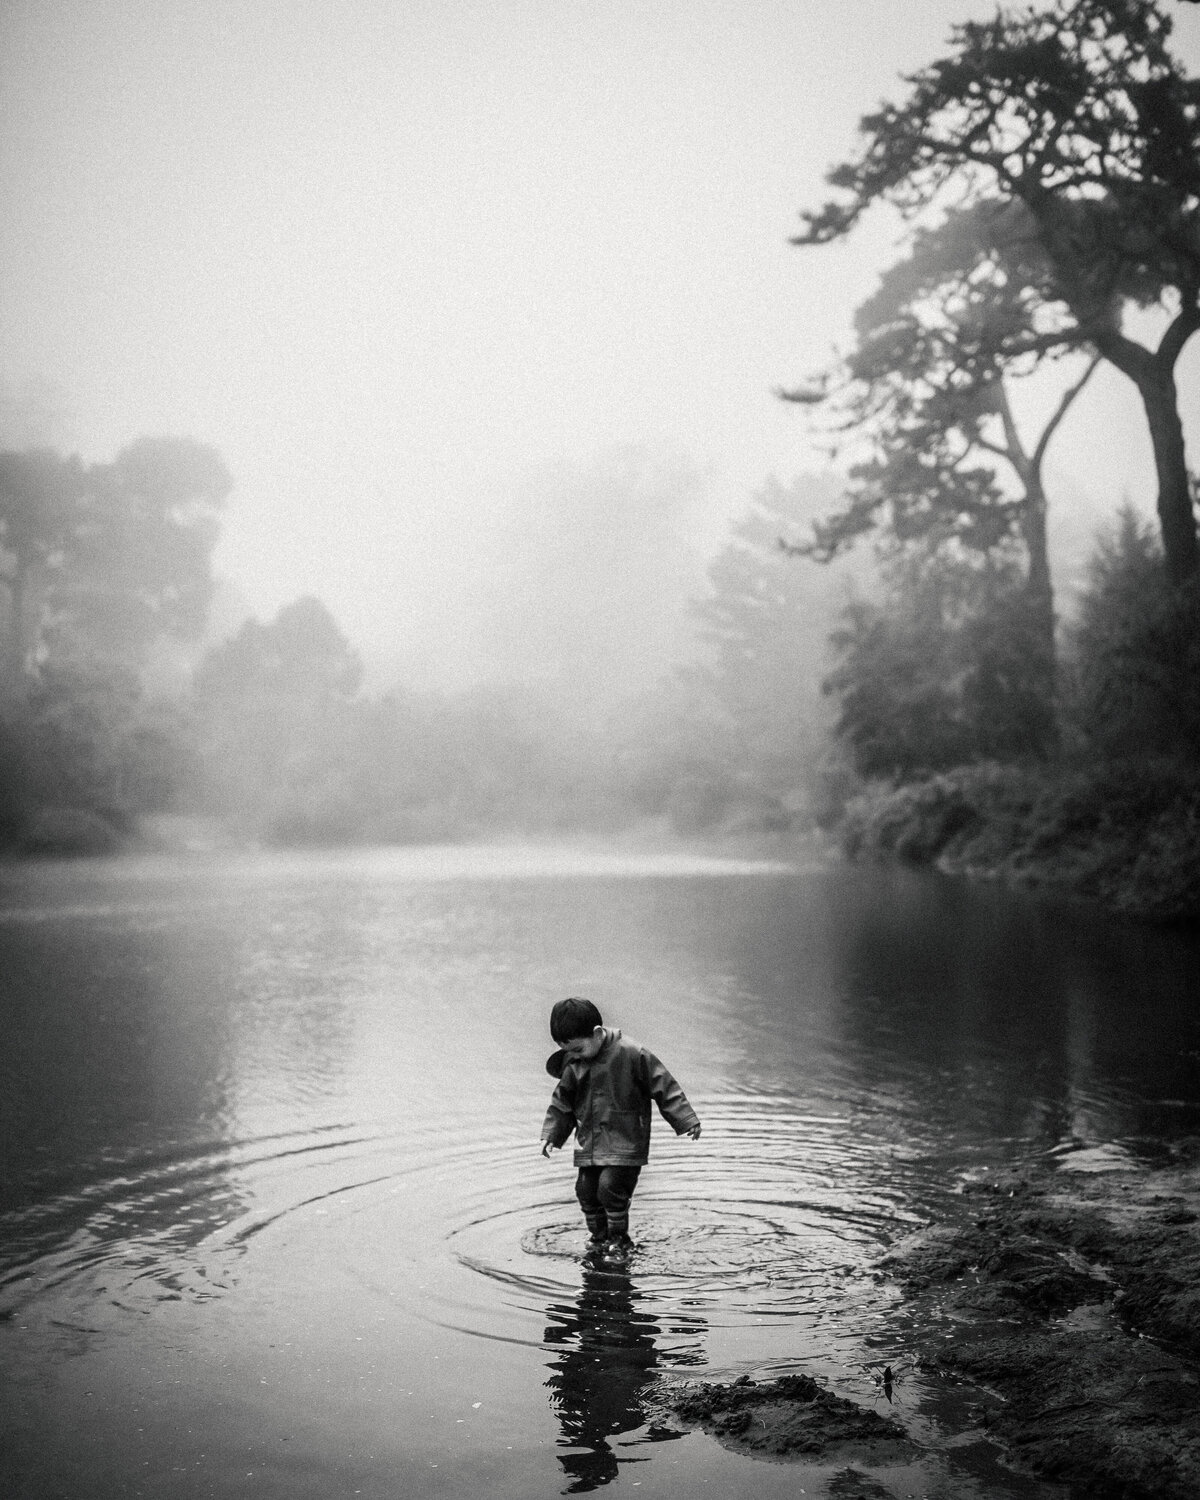 Boy in rain boots walks in lake making ripples on foggy San Franciscan day